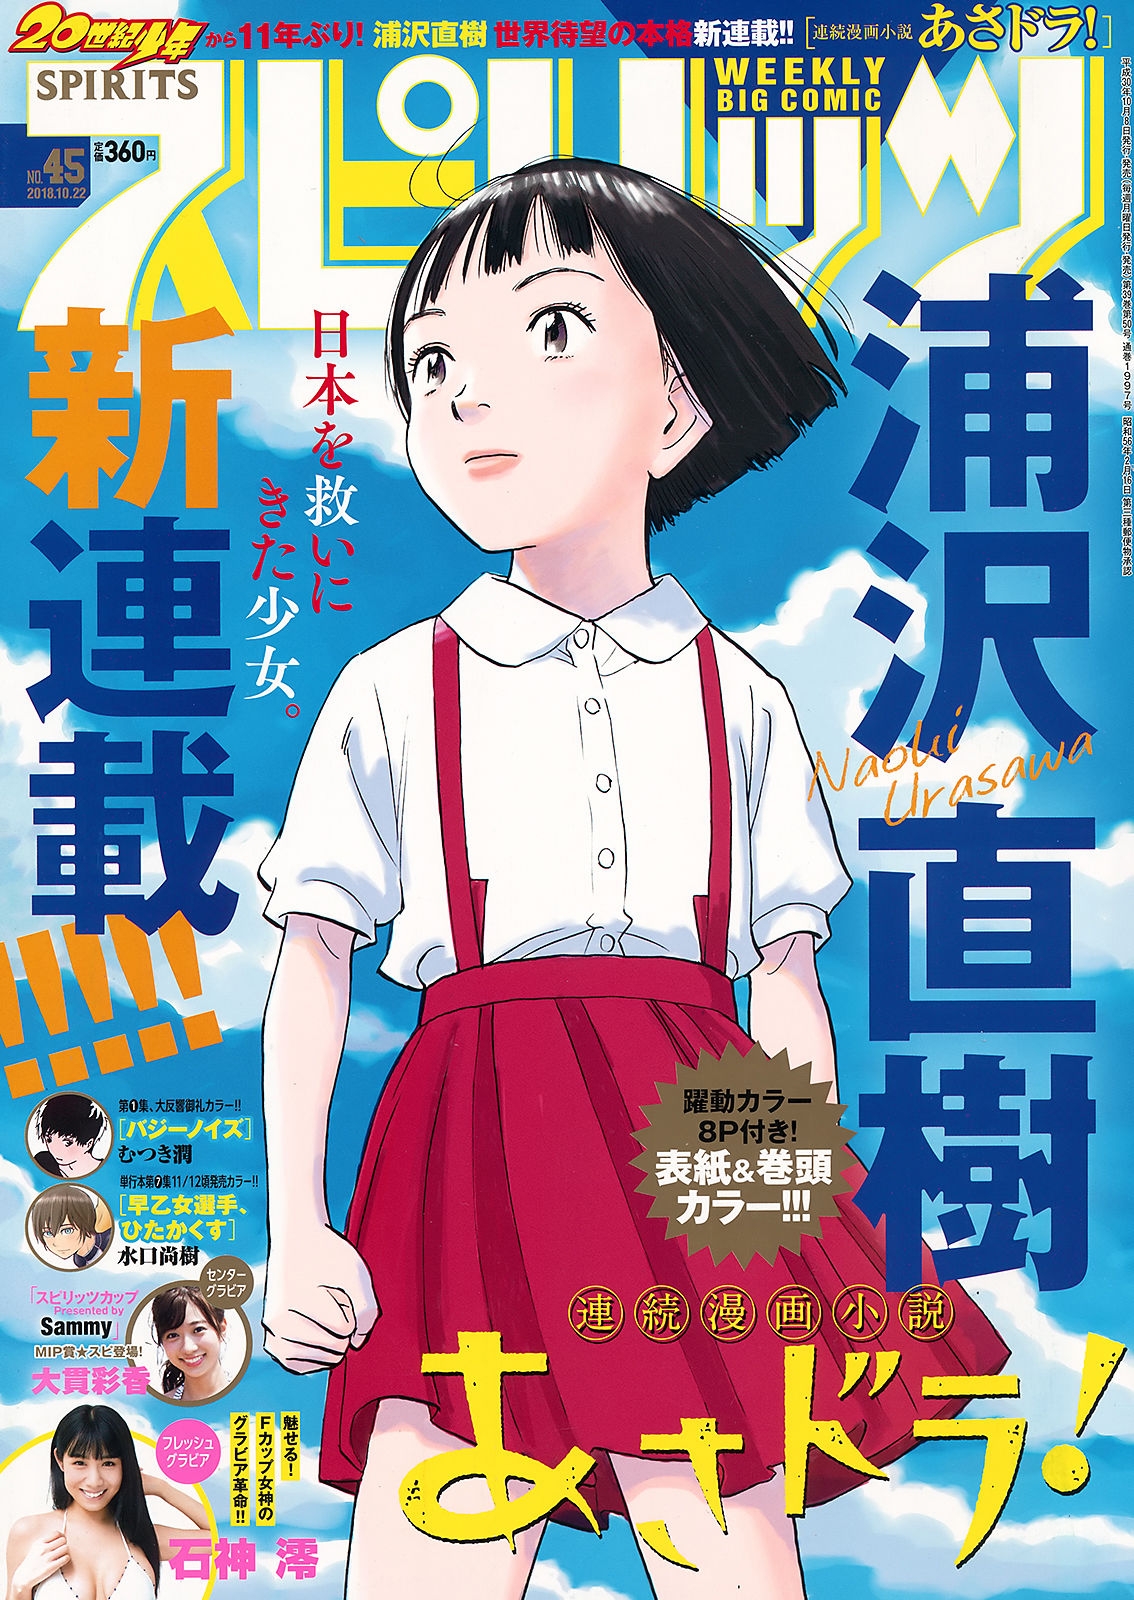 [Weekly Big Comic Spirits] 2018年No.45 石神澪 Rei Ishigami  第-1张